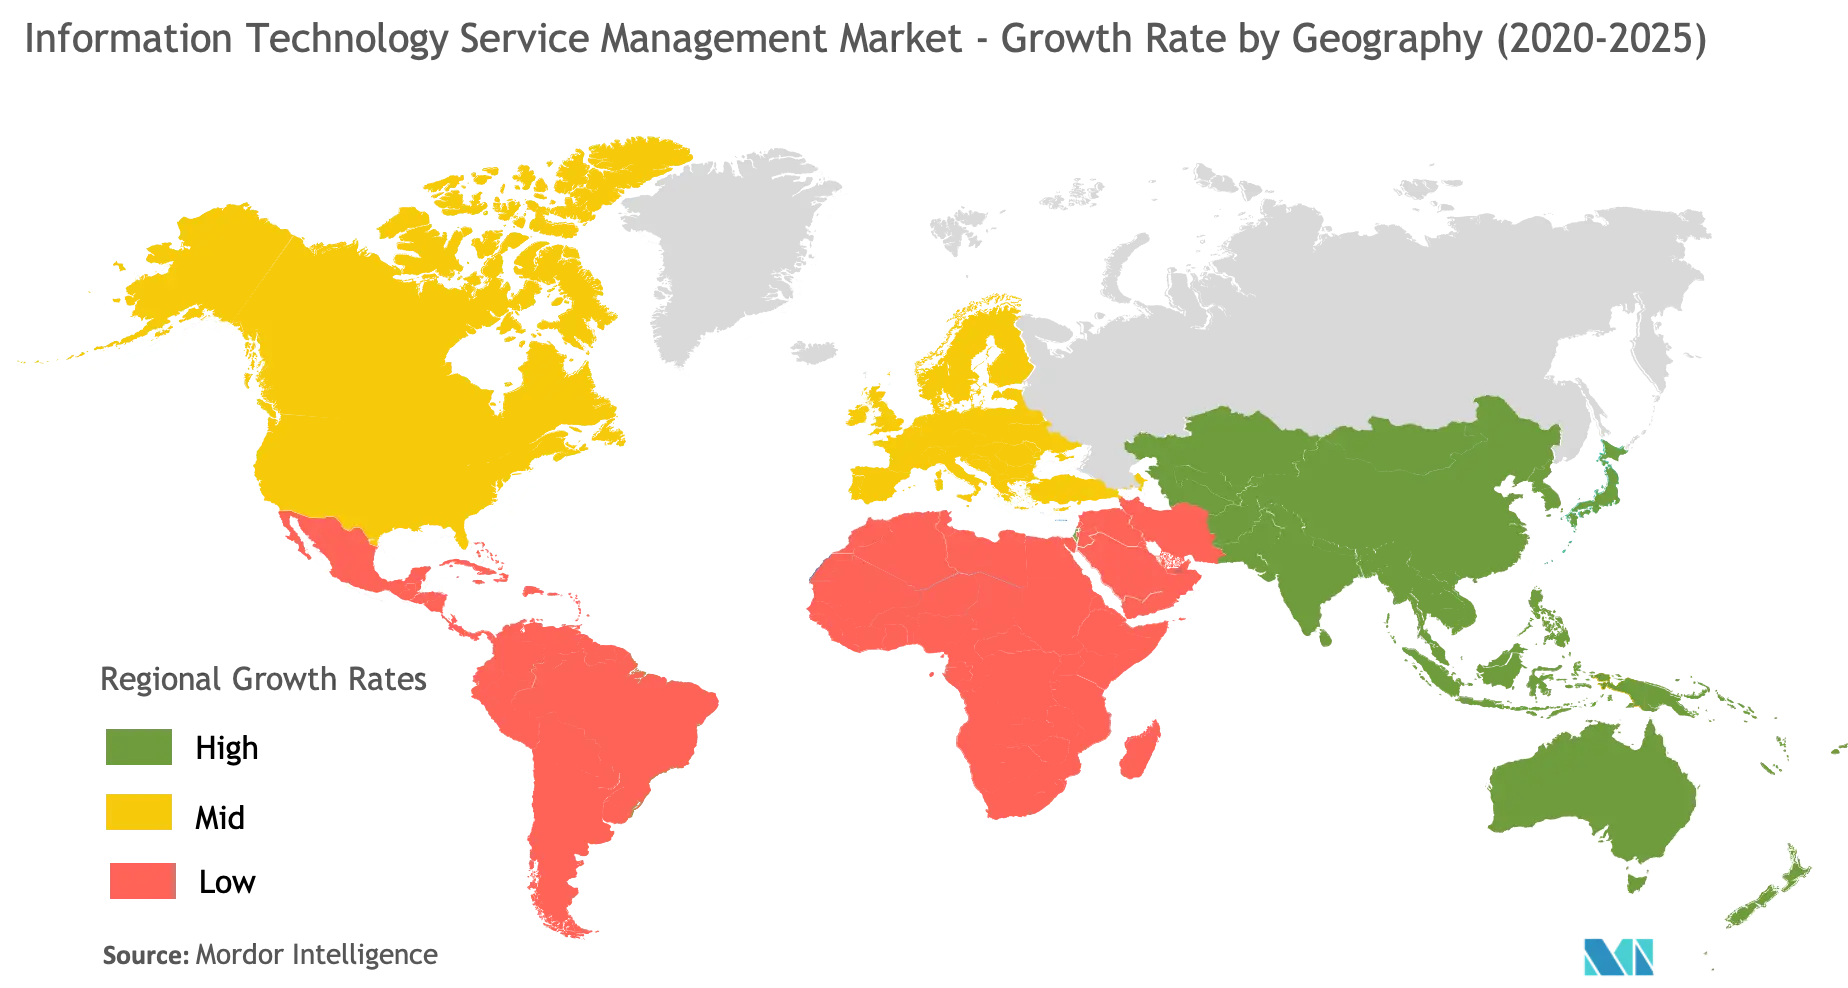  Information Technology Service Management Market Growth by Region